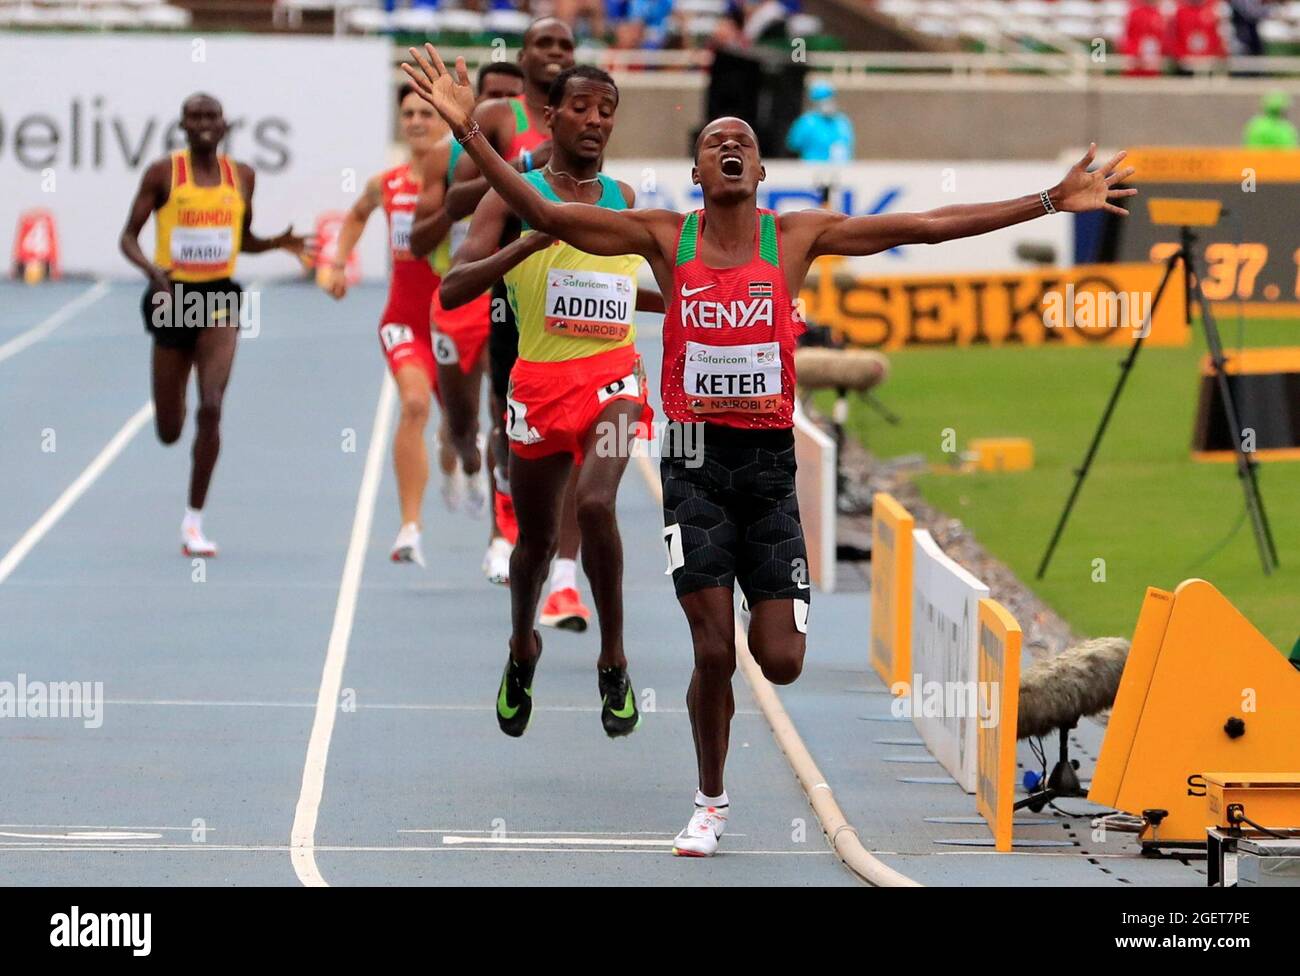 Athletics - 2021 World Athletics U20 Championships - Kenya's Vincent Keter celebrates winning in the Men's 1500m final - Kasarani Stadium, Nairobi, Kenya - August 21, 2021. REUTERS/Thomas Mukoya Stock Photo